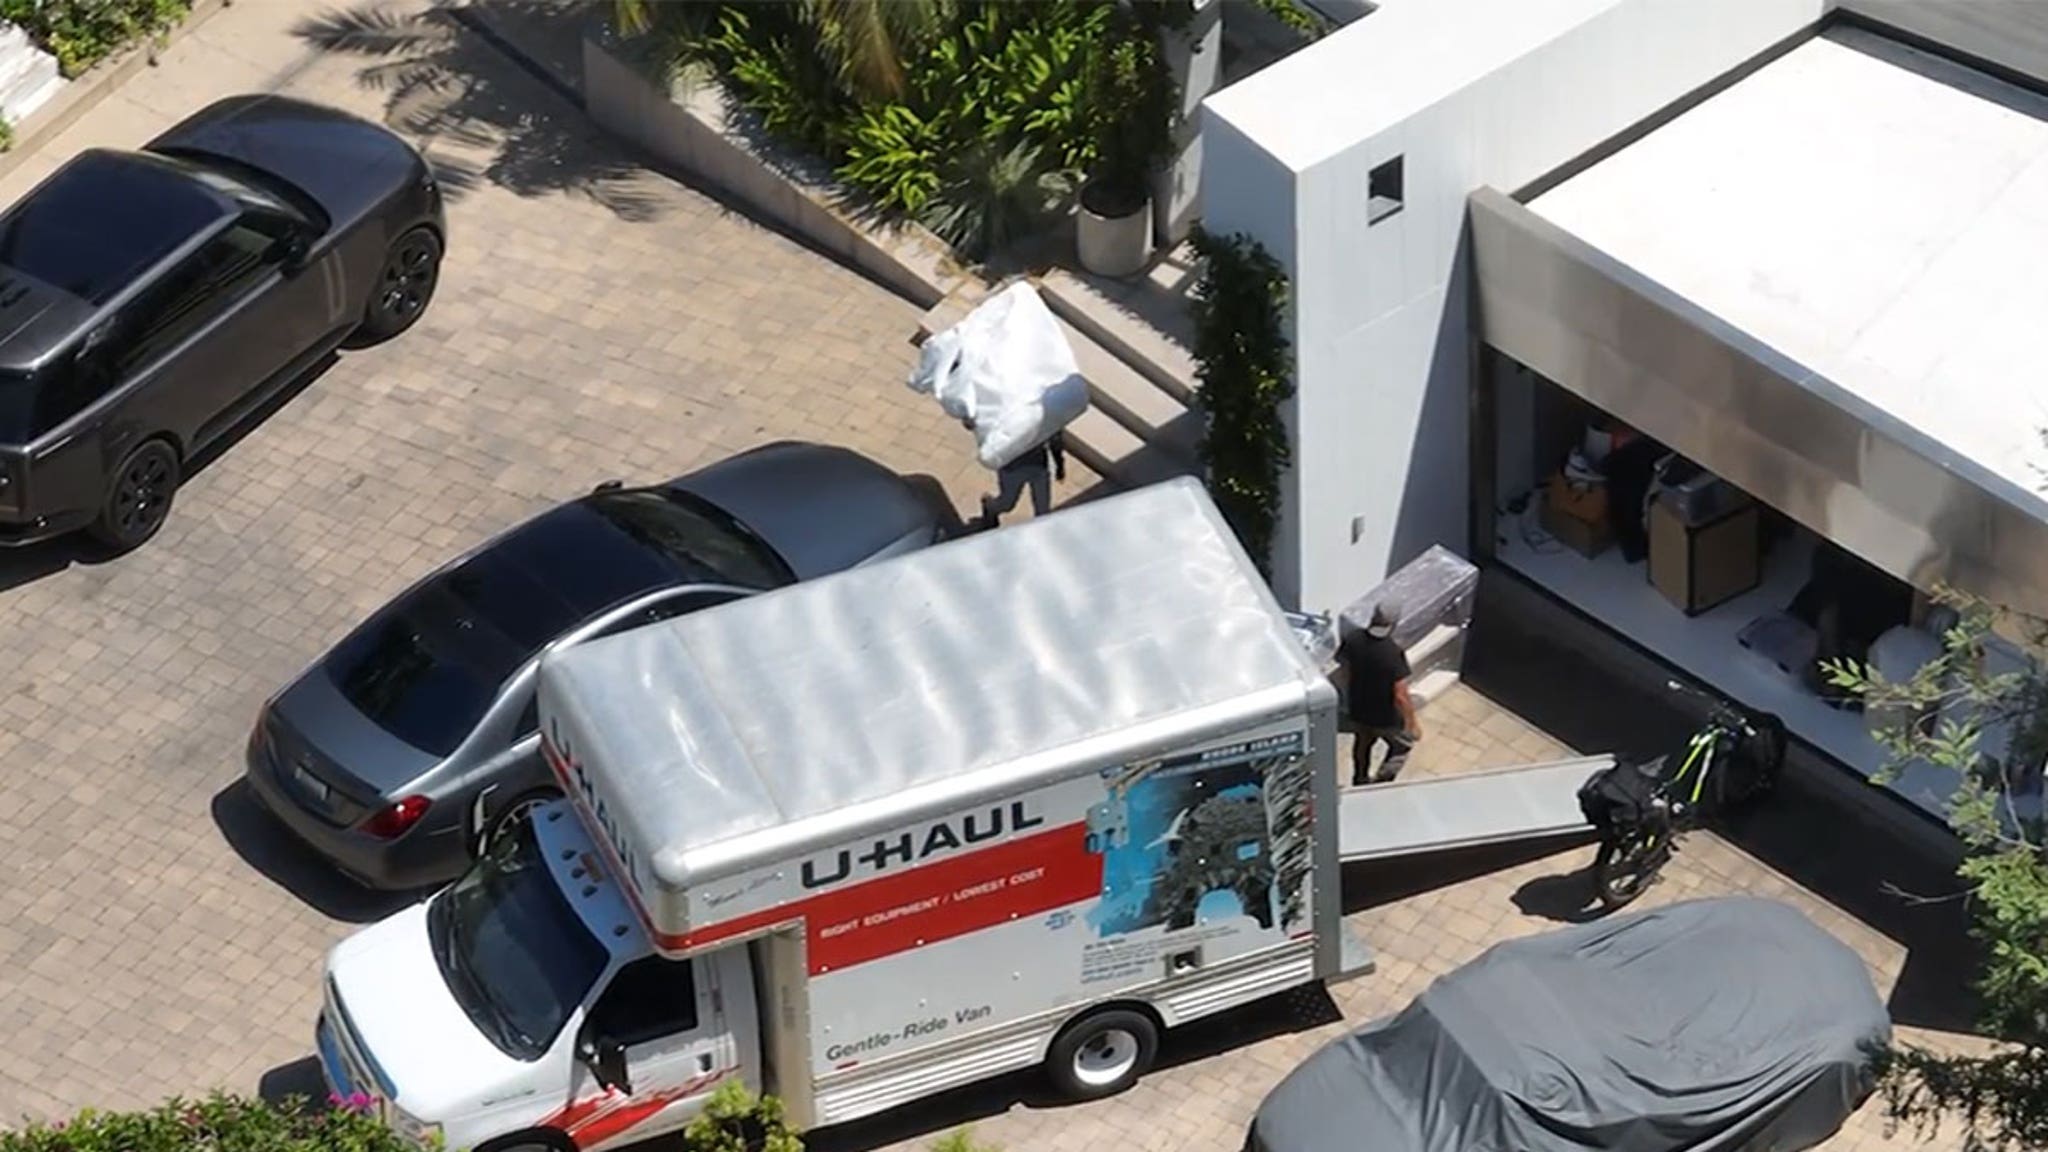 Kevin Costner’s Estranged Wife Christine Moving Out, U-Haul Trucks at Home